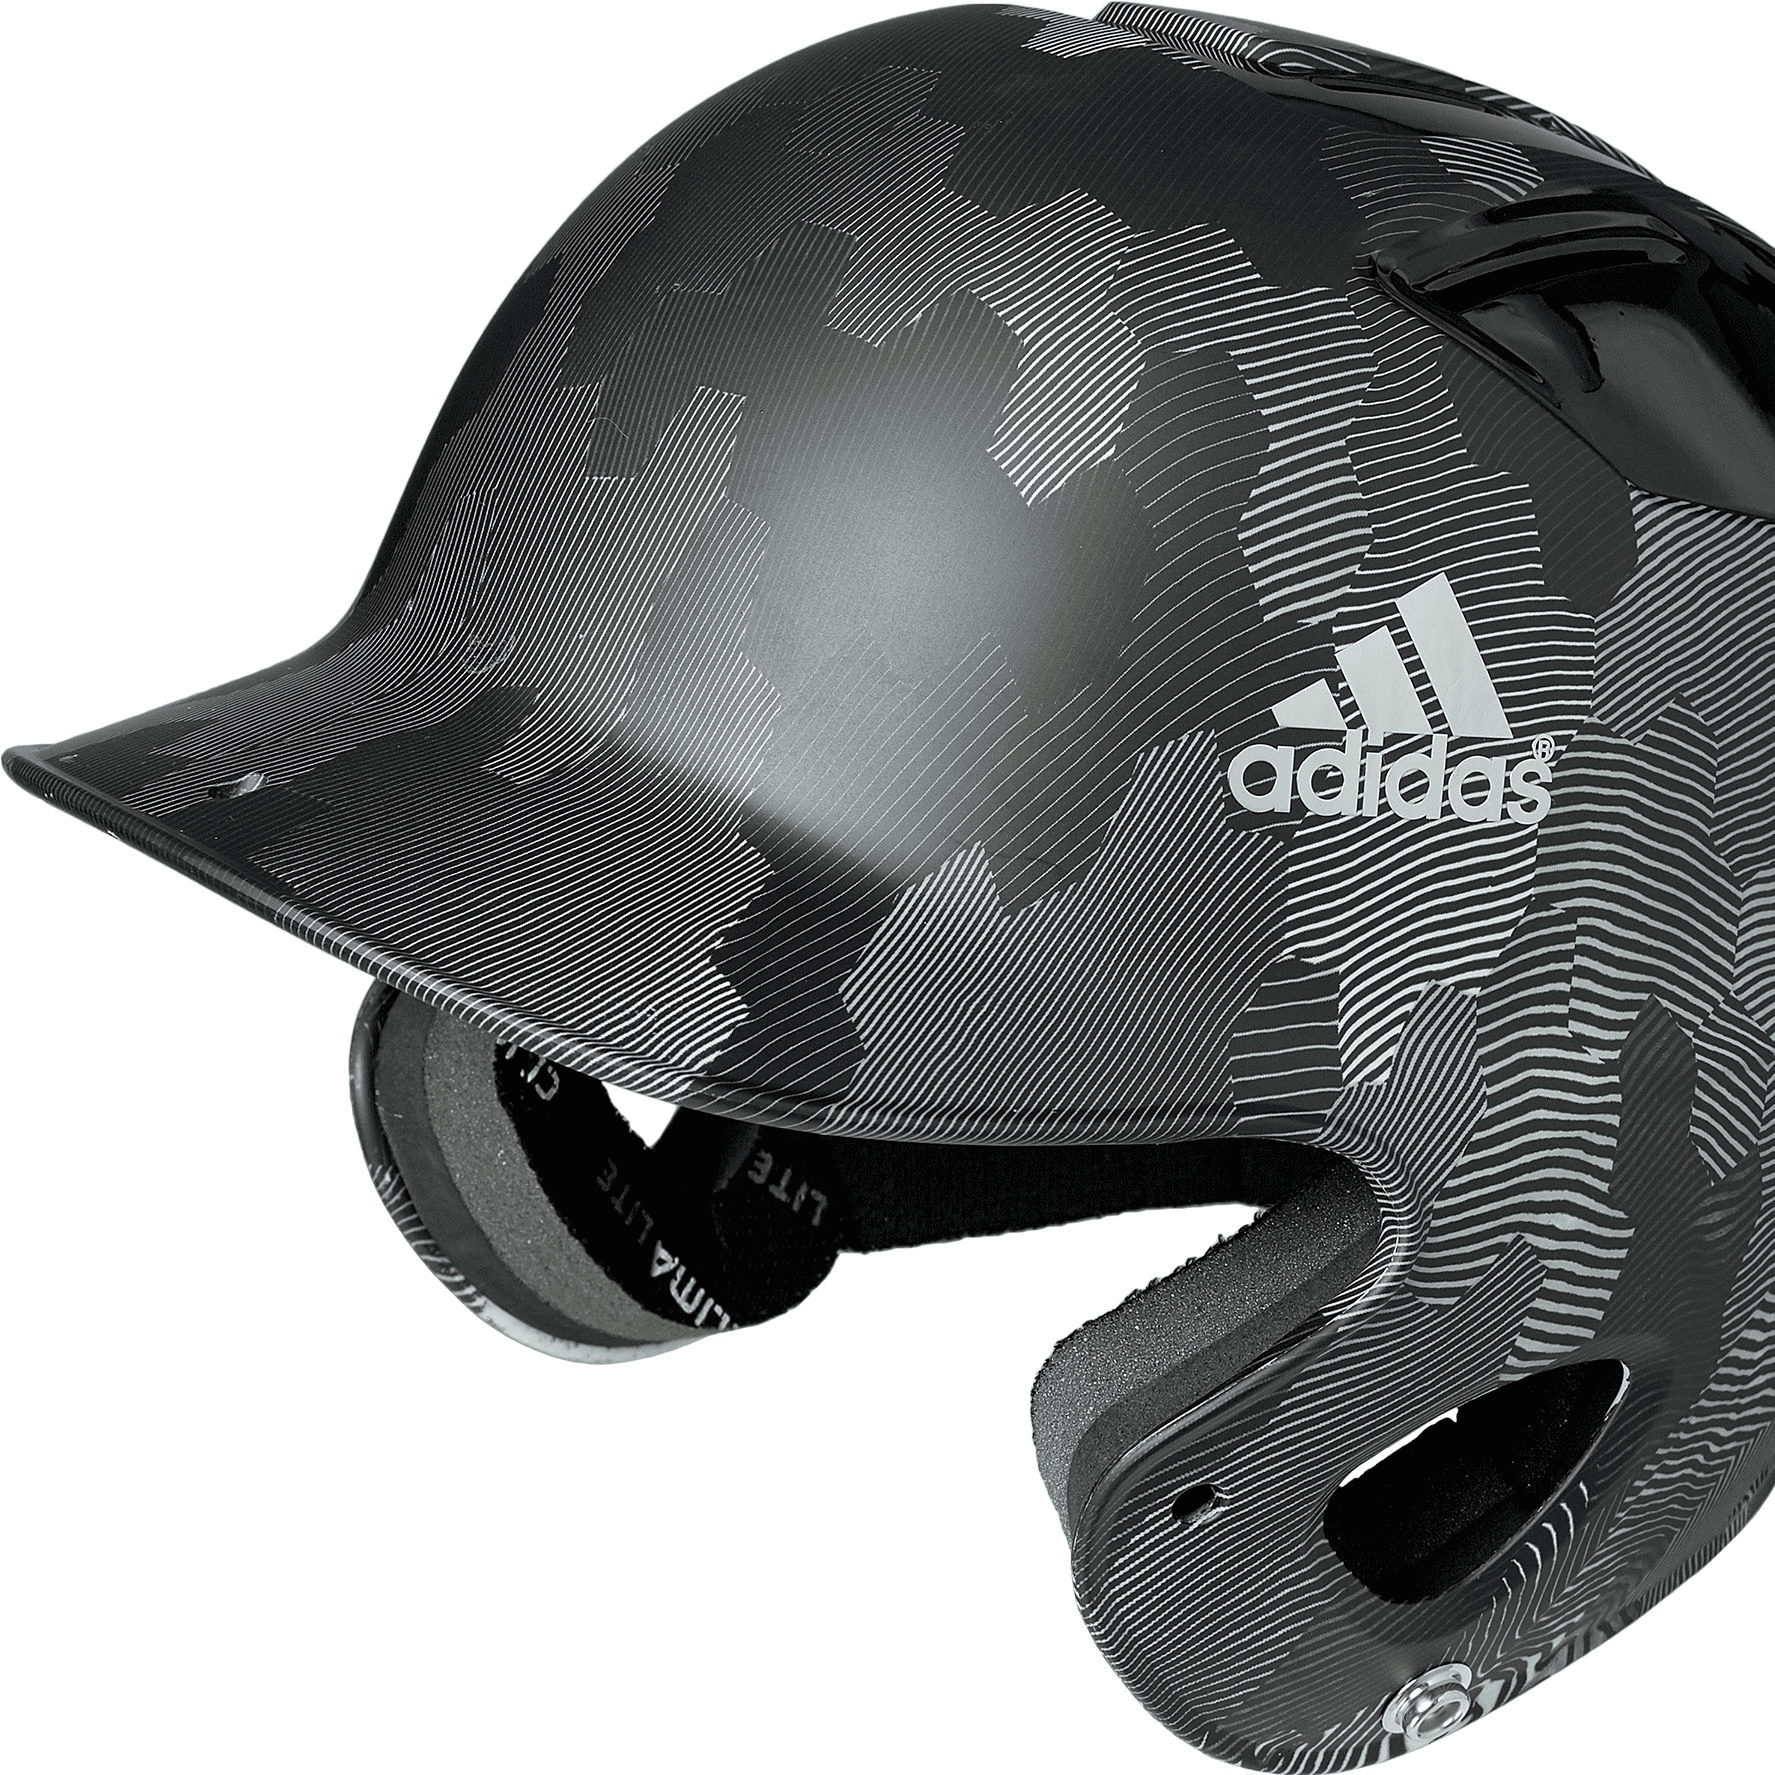 adidas OSFM Camo Batting Helmet, Black 